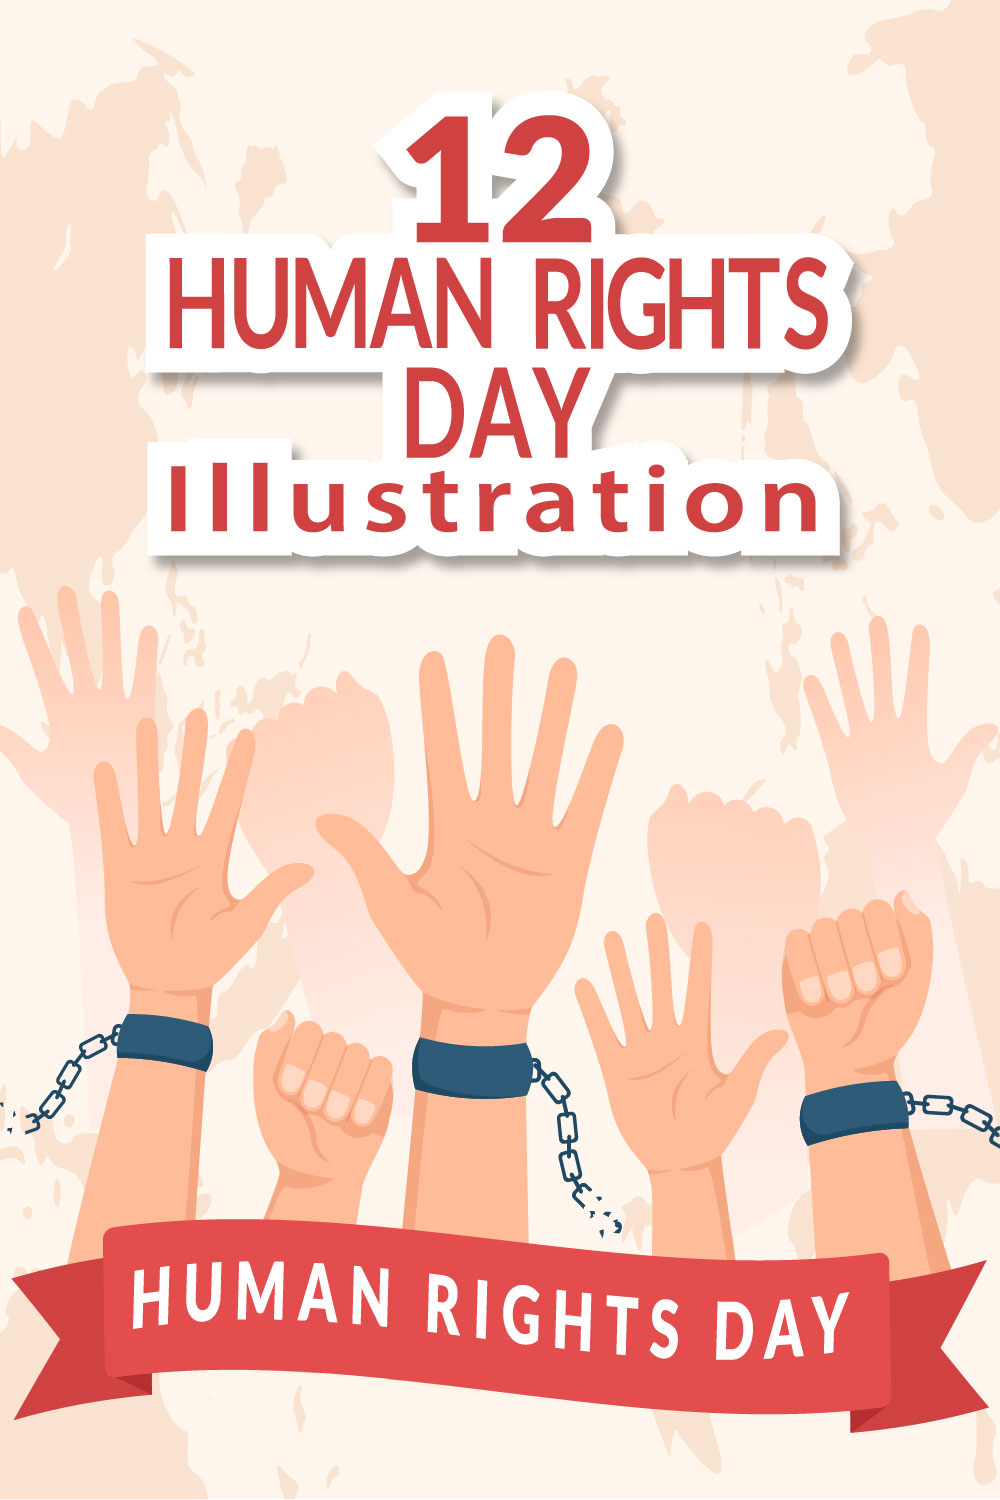 12 Human Rights Day Illustration Pinterest Image.